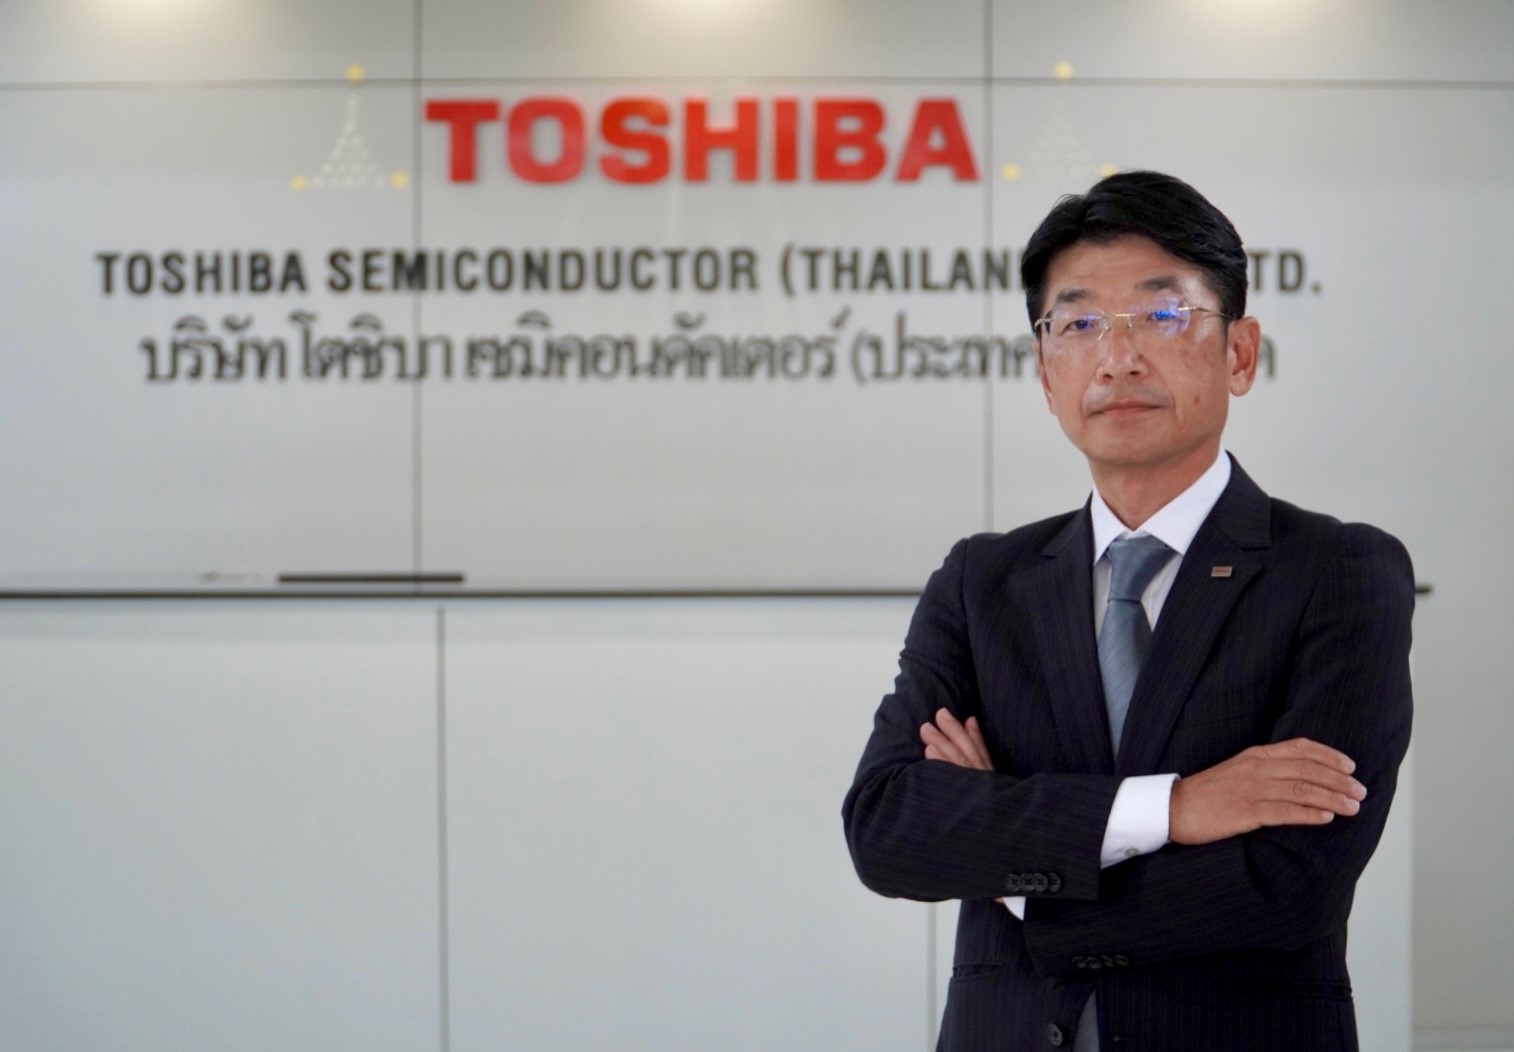 Masahiro Ogushi, President, Toshiba Semiconductor (Thailand) Co., Ltd.